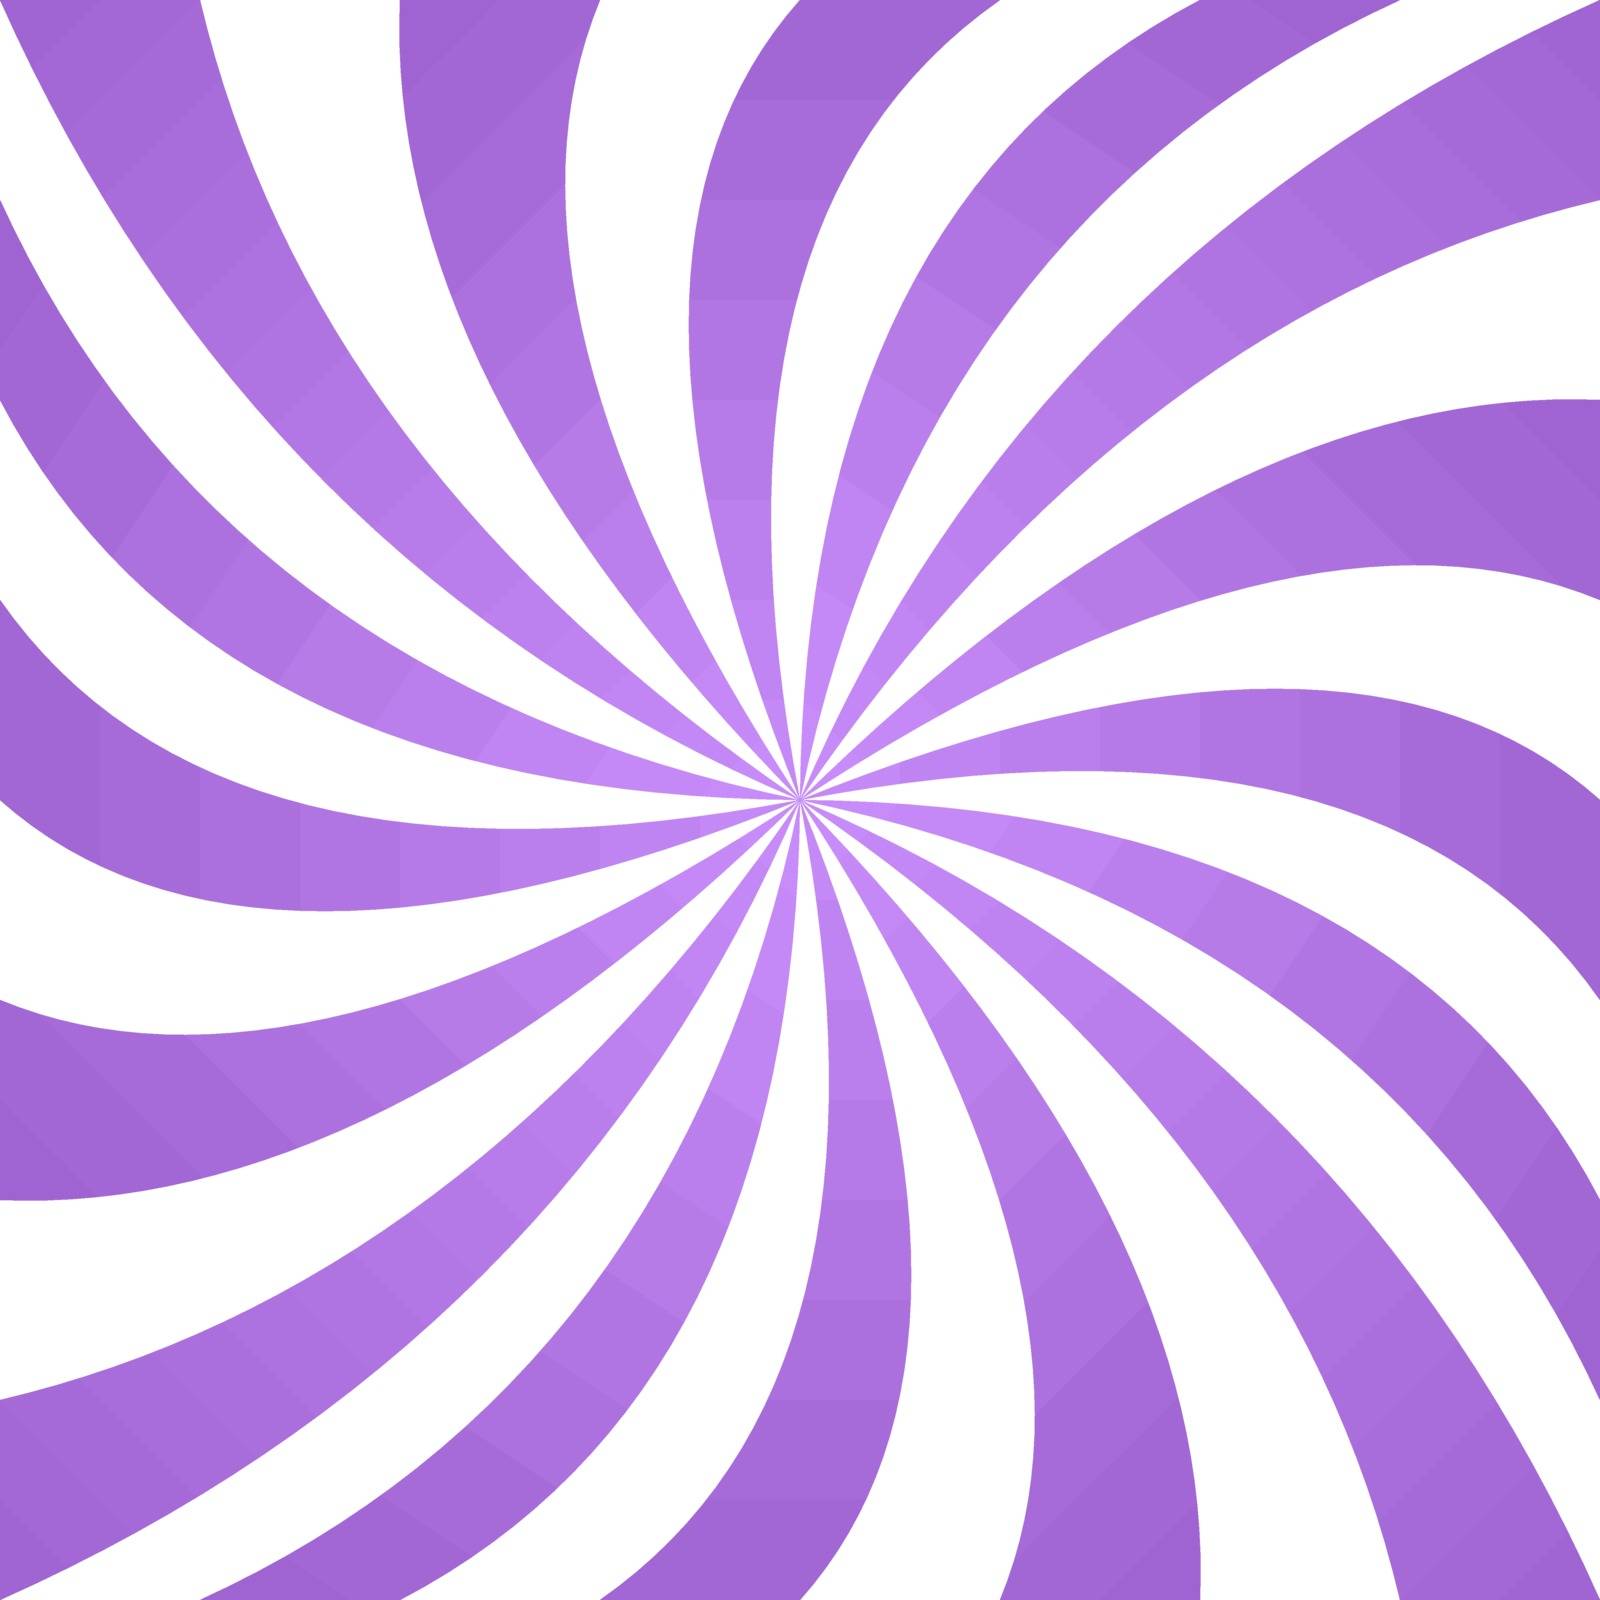 Lavender twirl pattern background by davidzydd